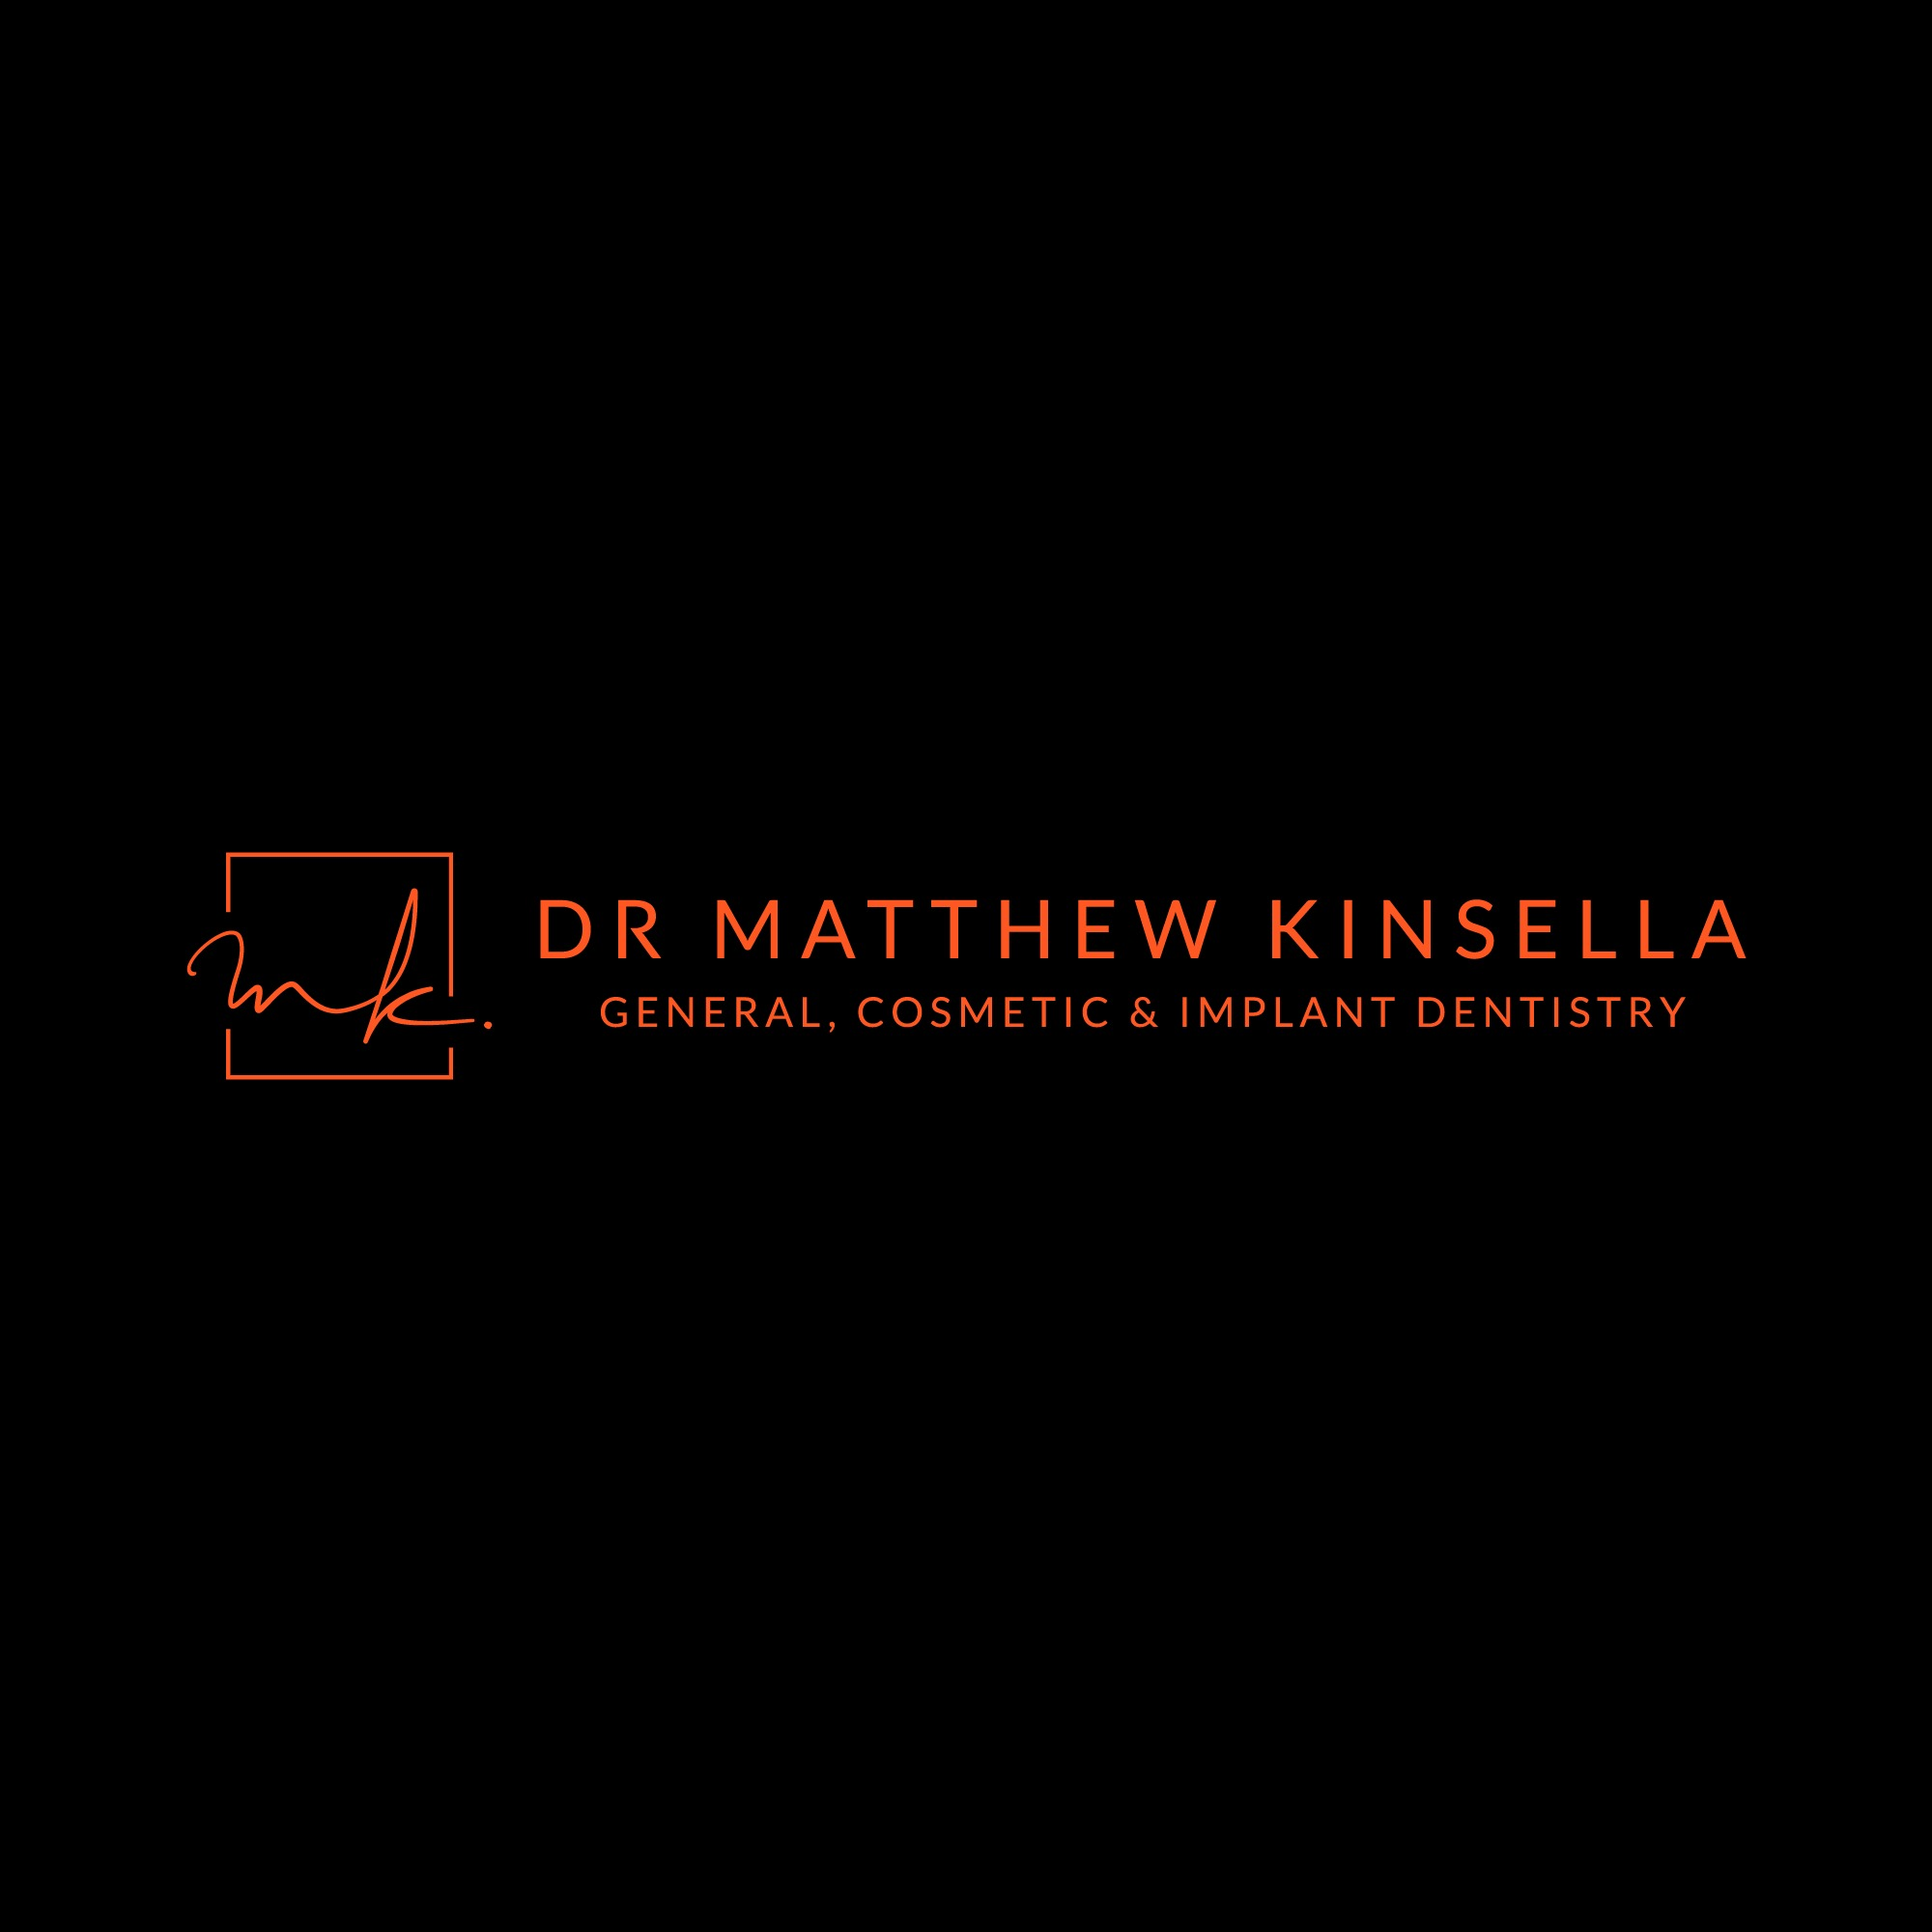 Dr Matthew Kinsella, General, Cosmetic & Implant Dentistry - West Perth, WA 6005 - (08) 9321 6449 | ShowMeLocal.com